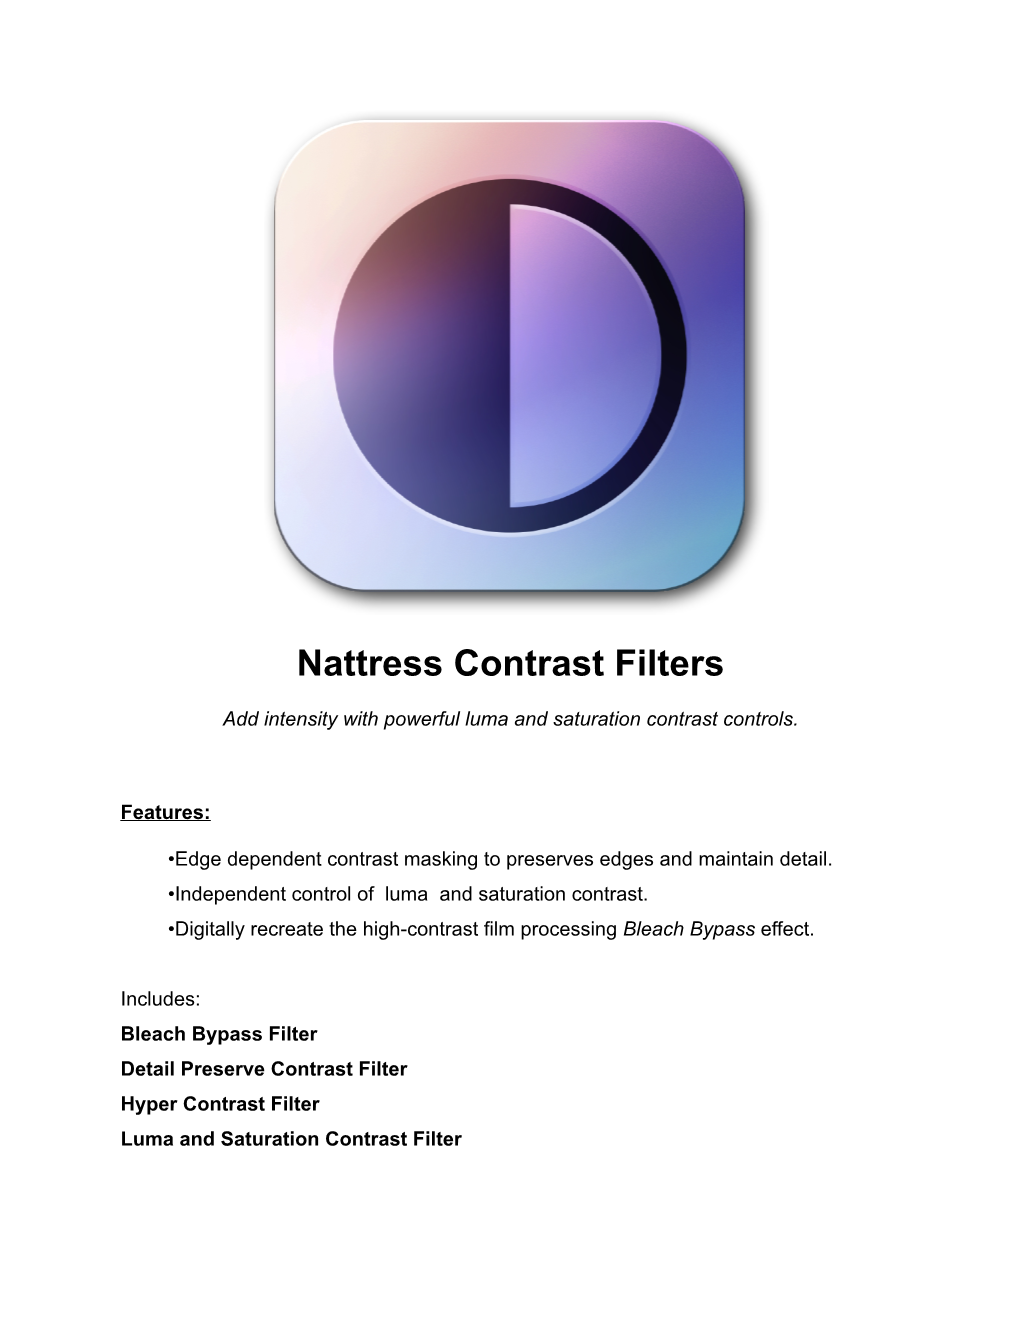 Nattress Contrast Filters